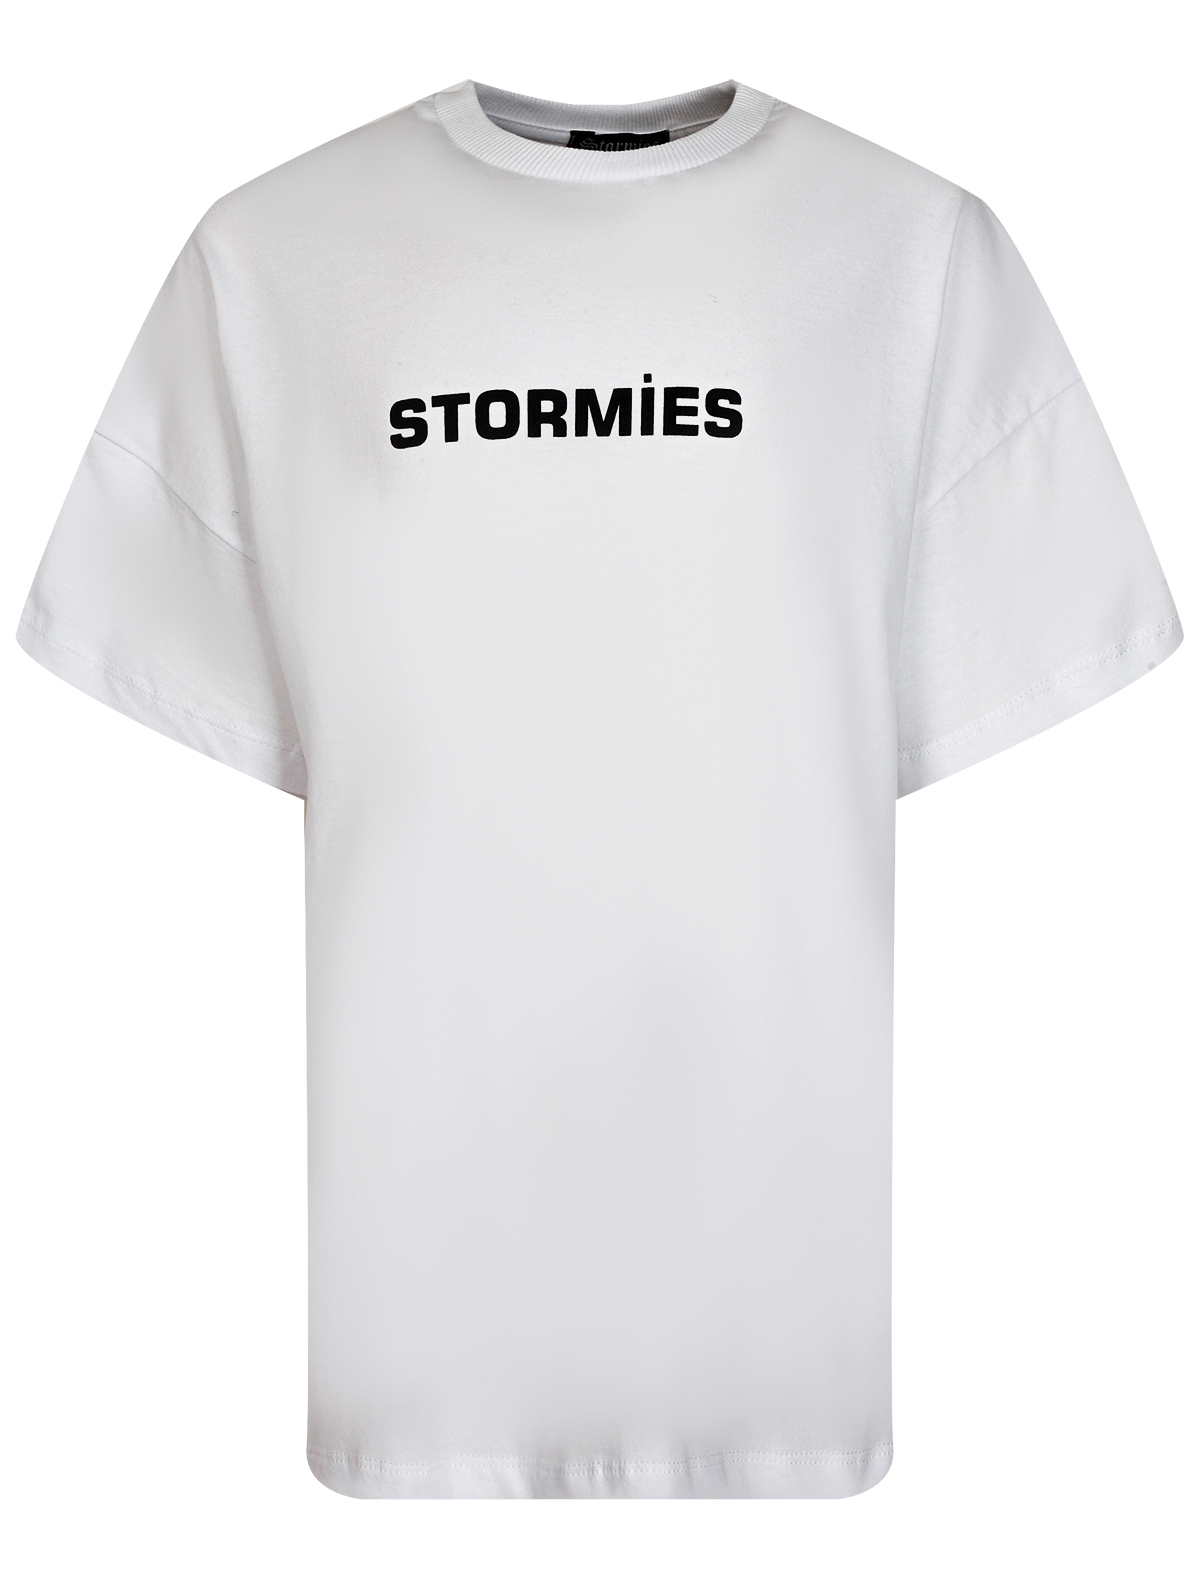 Футболка Stormies 2615501, цвет белый, размер 7